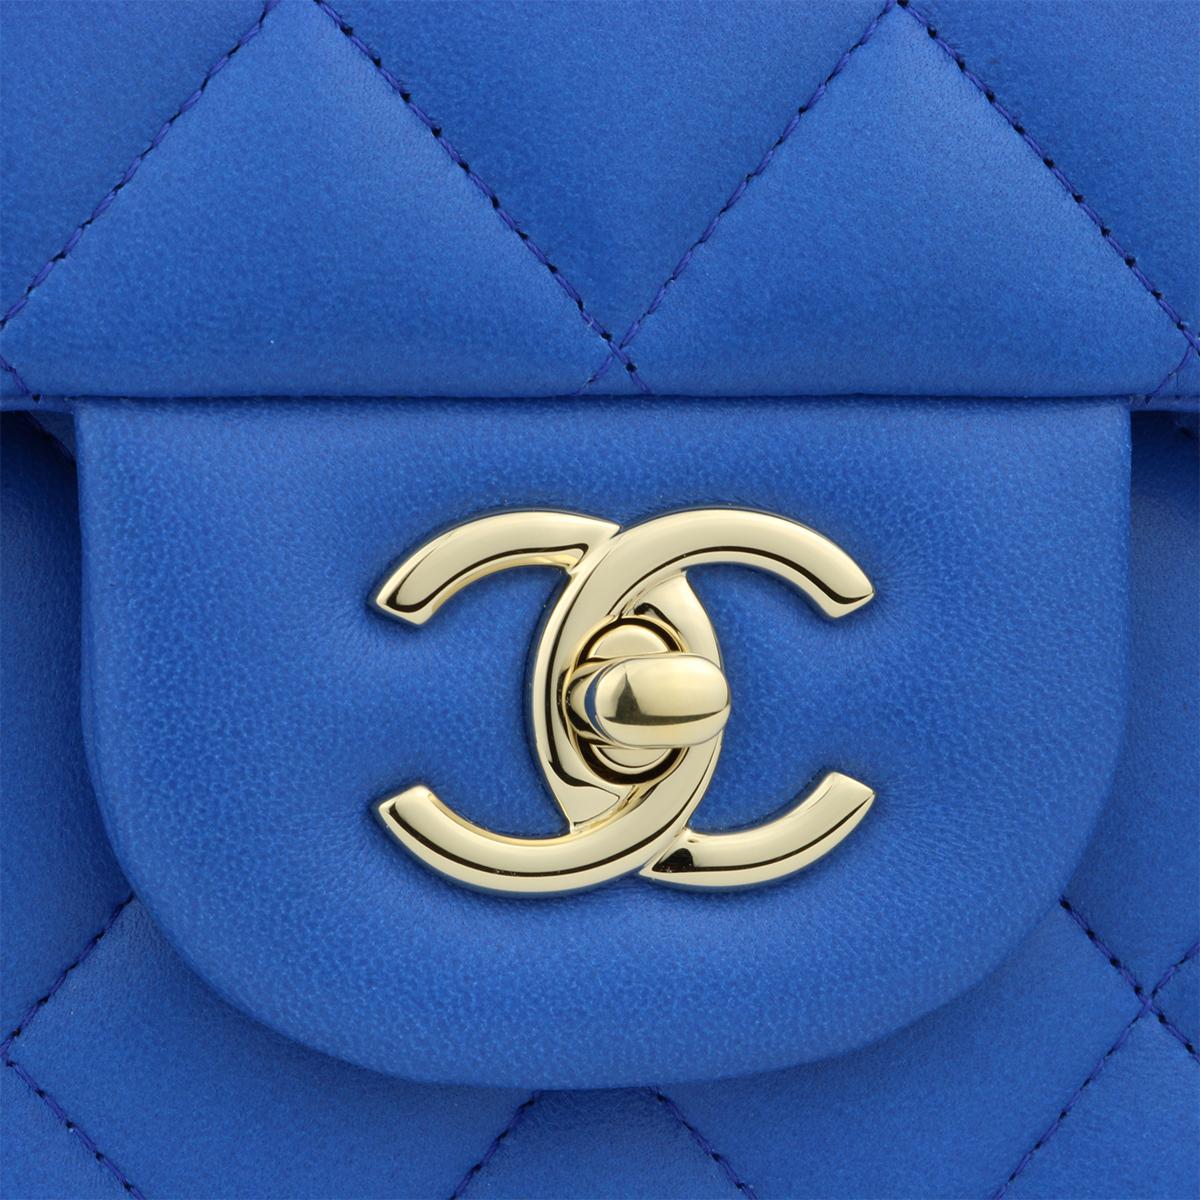 chanel royal blue bag